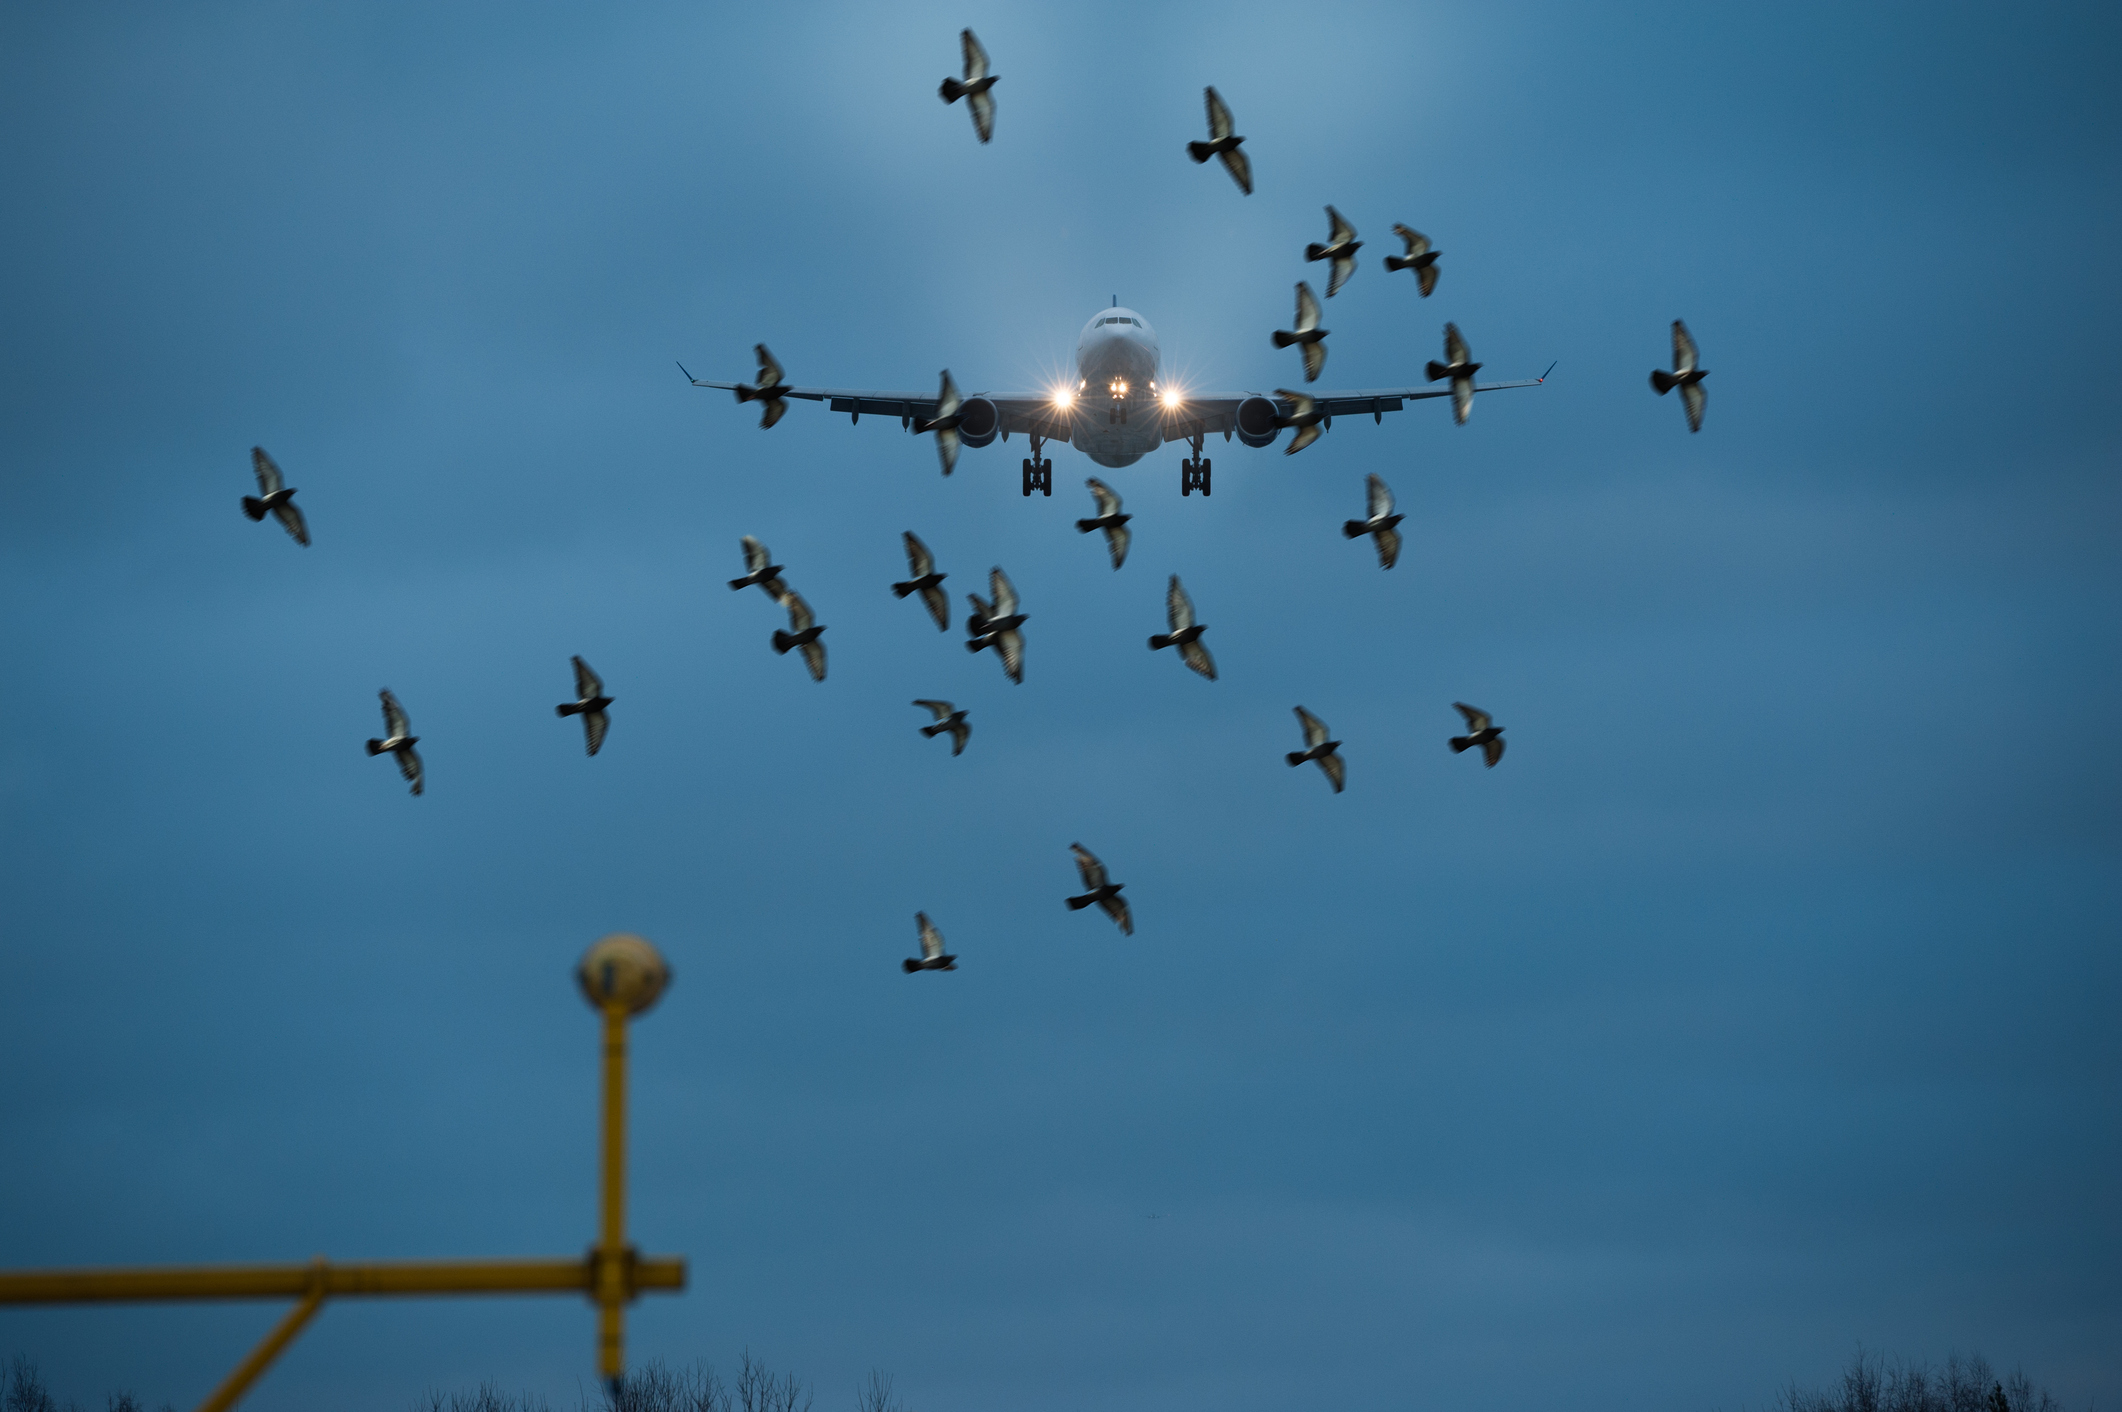 A Swarm Of Birds Attacked A Plane For A Tragic Reason